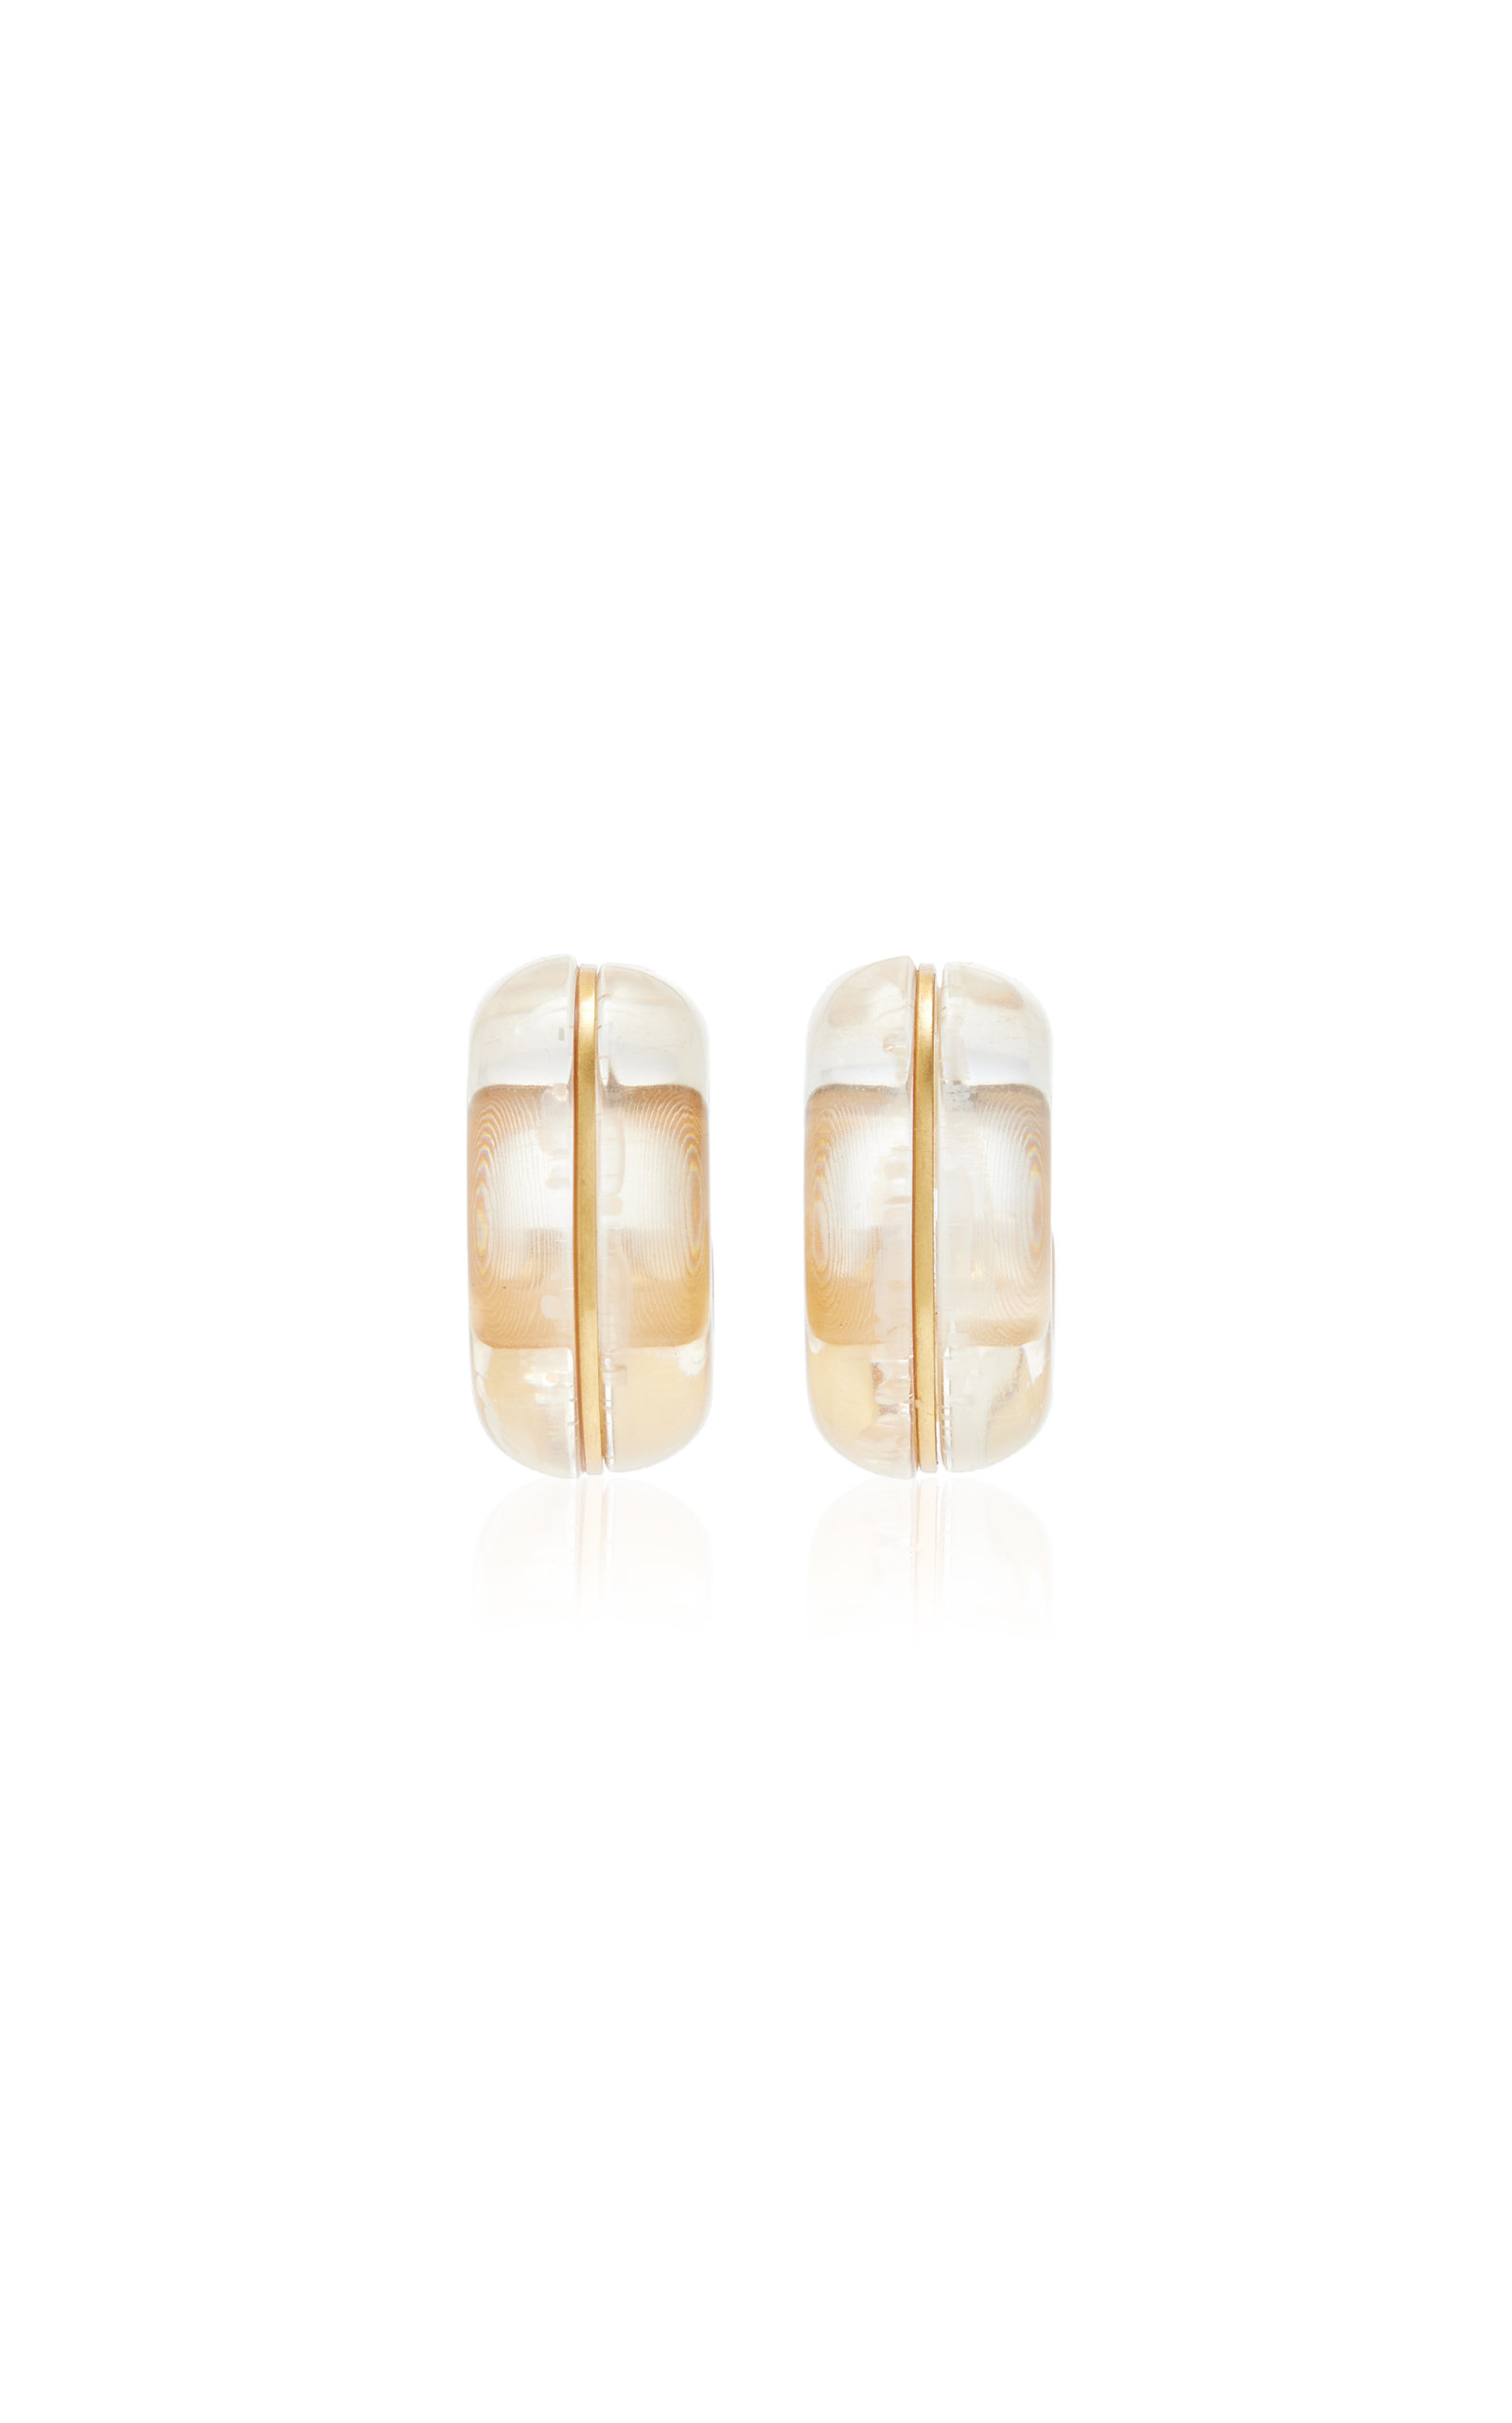 Lizzie Fortunato Women's Halo Gold-Plated; Acrylic Hoop Earrings